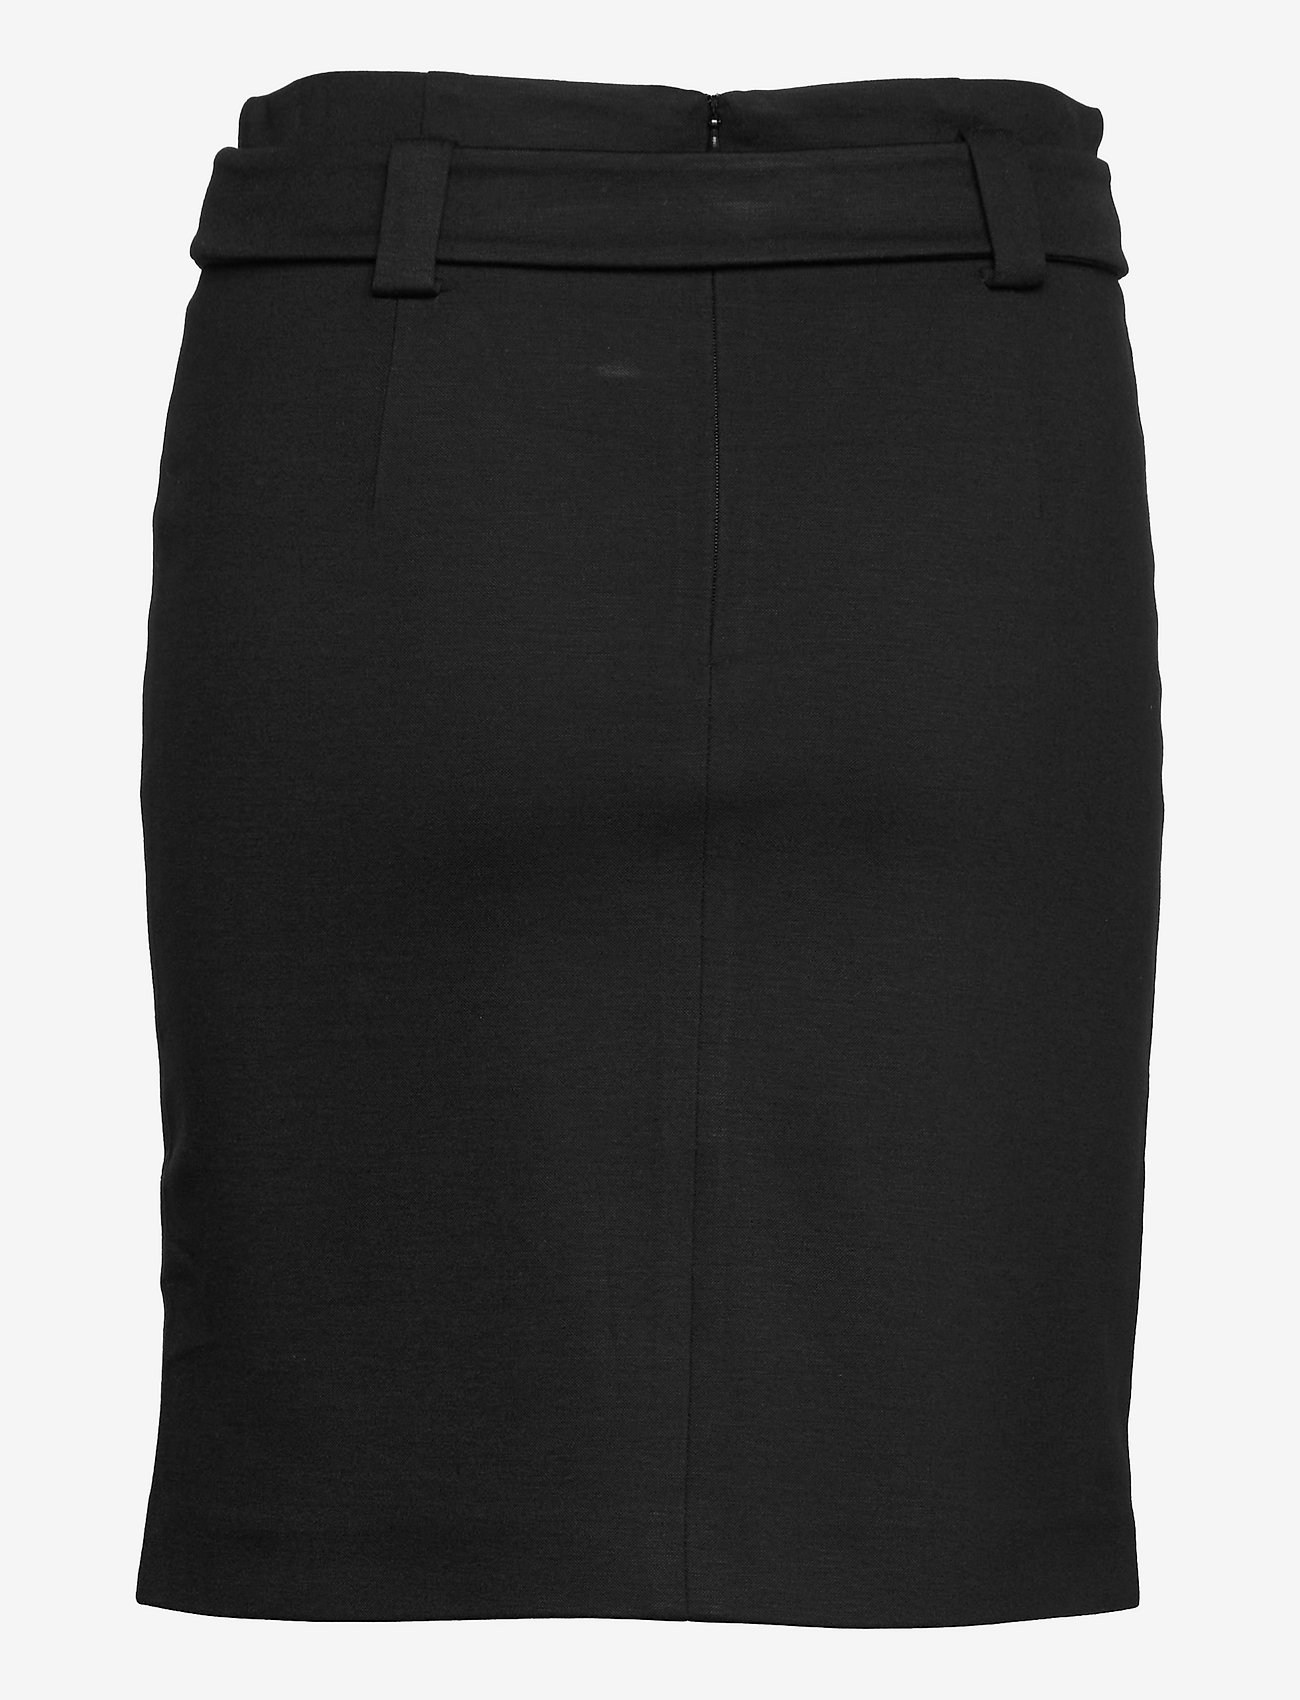 Esprit Collection - Fashion Skirt - korta kjolar - black - 1